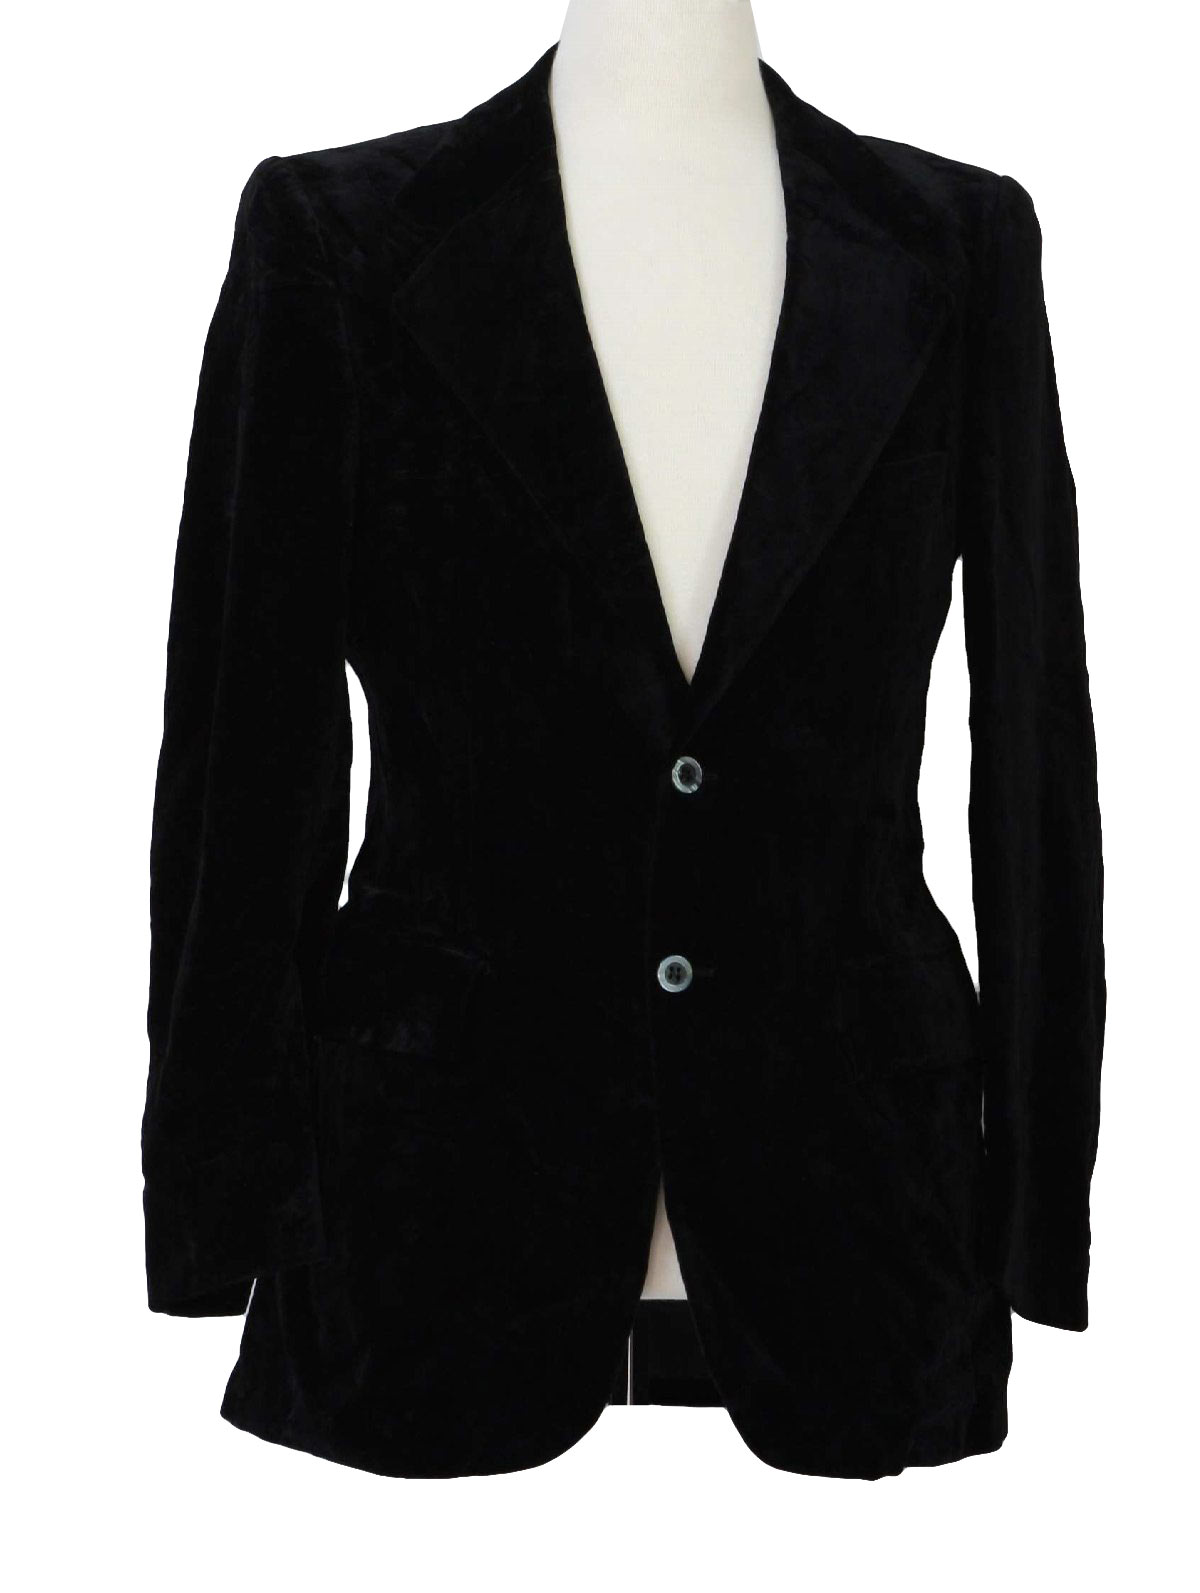 Grodins Yves Saint Laurent 1970s Vintage Jacket: 70s -Grodins Yves ...